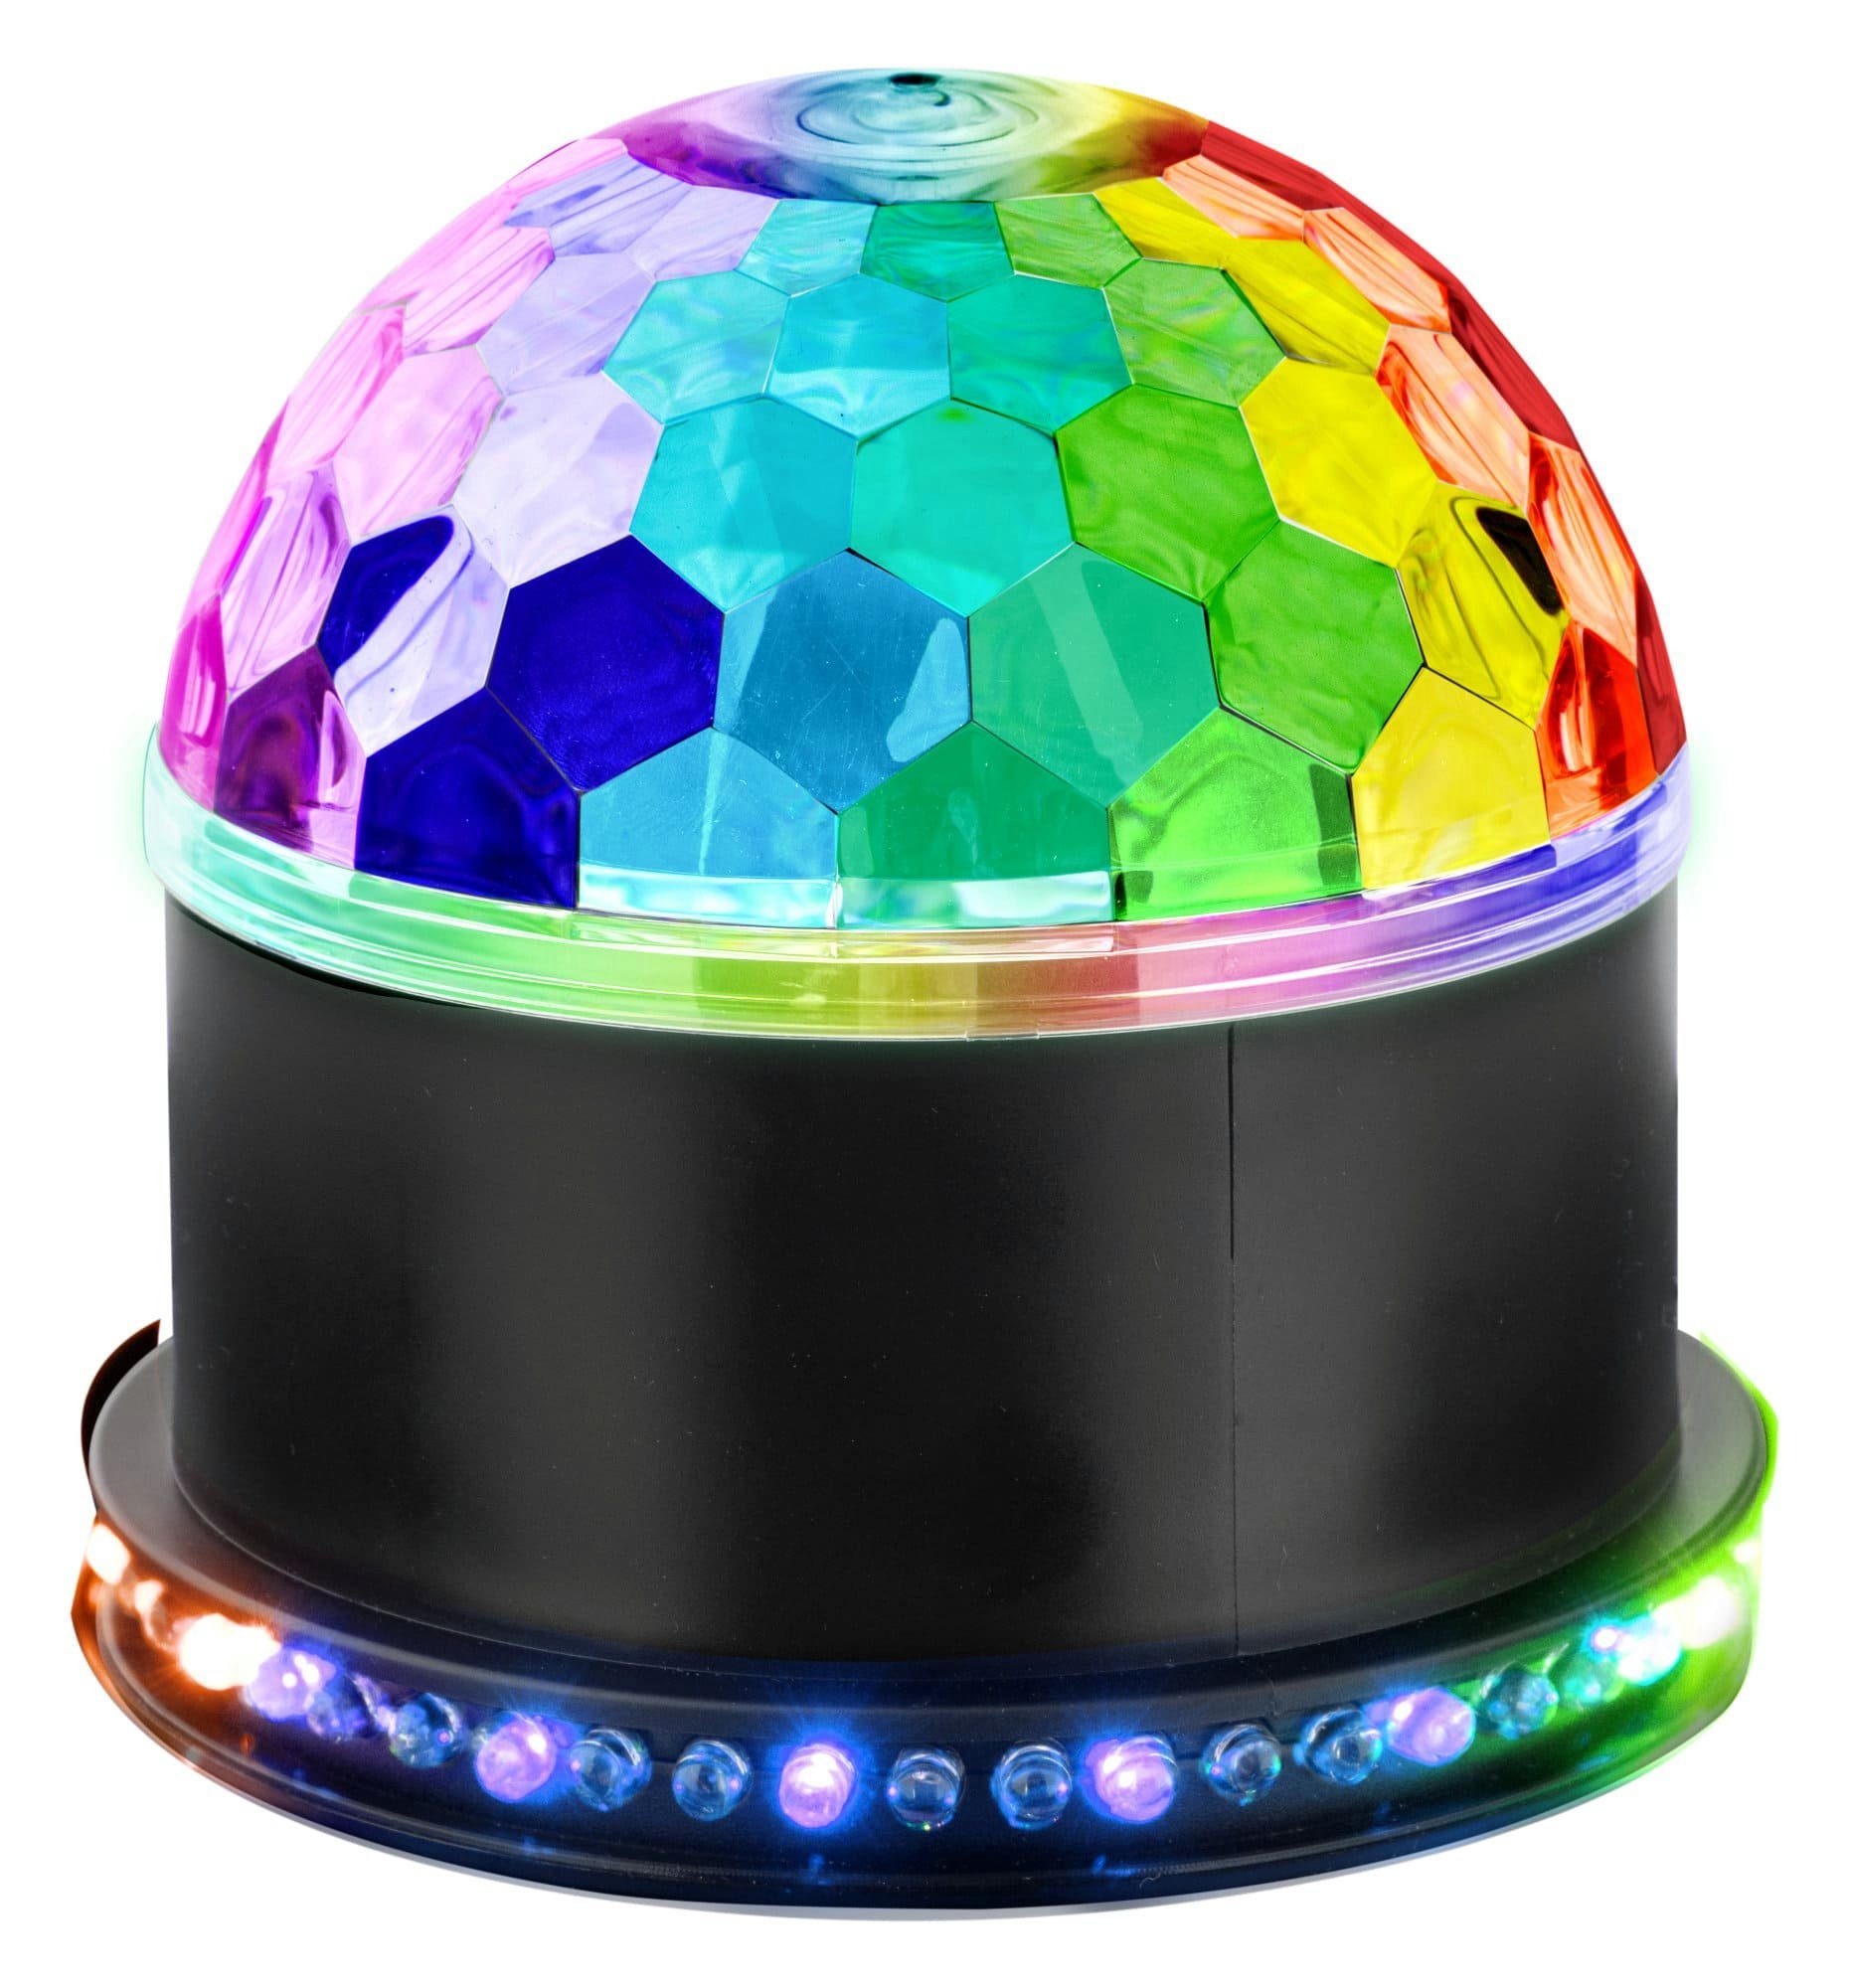 Showlite Discolicht PBM-9 Mini-Party-Ball, LED fest integriert, Farbwechsler, kleine LED Discokugel für Party, Bar, mobile DJs